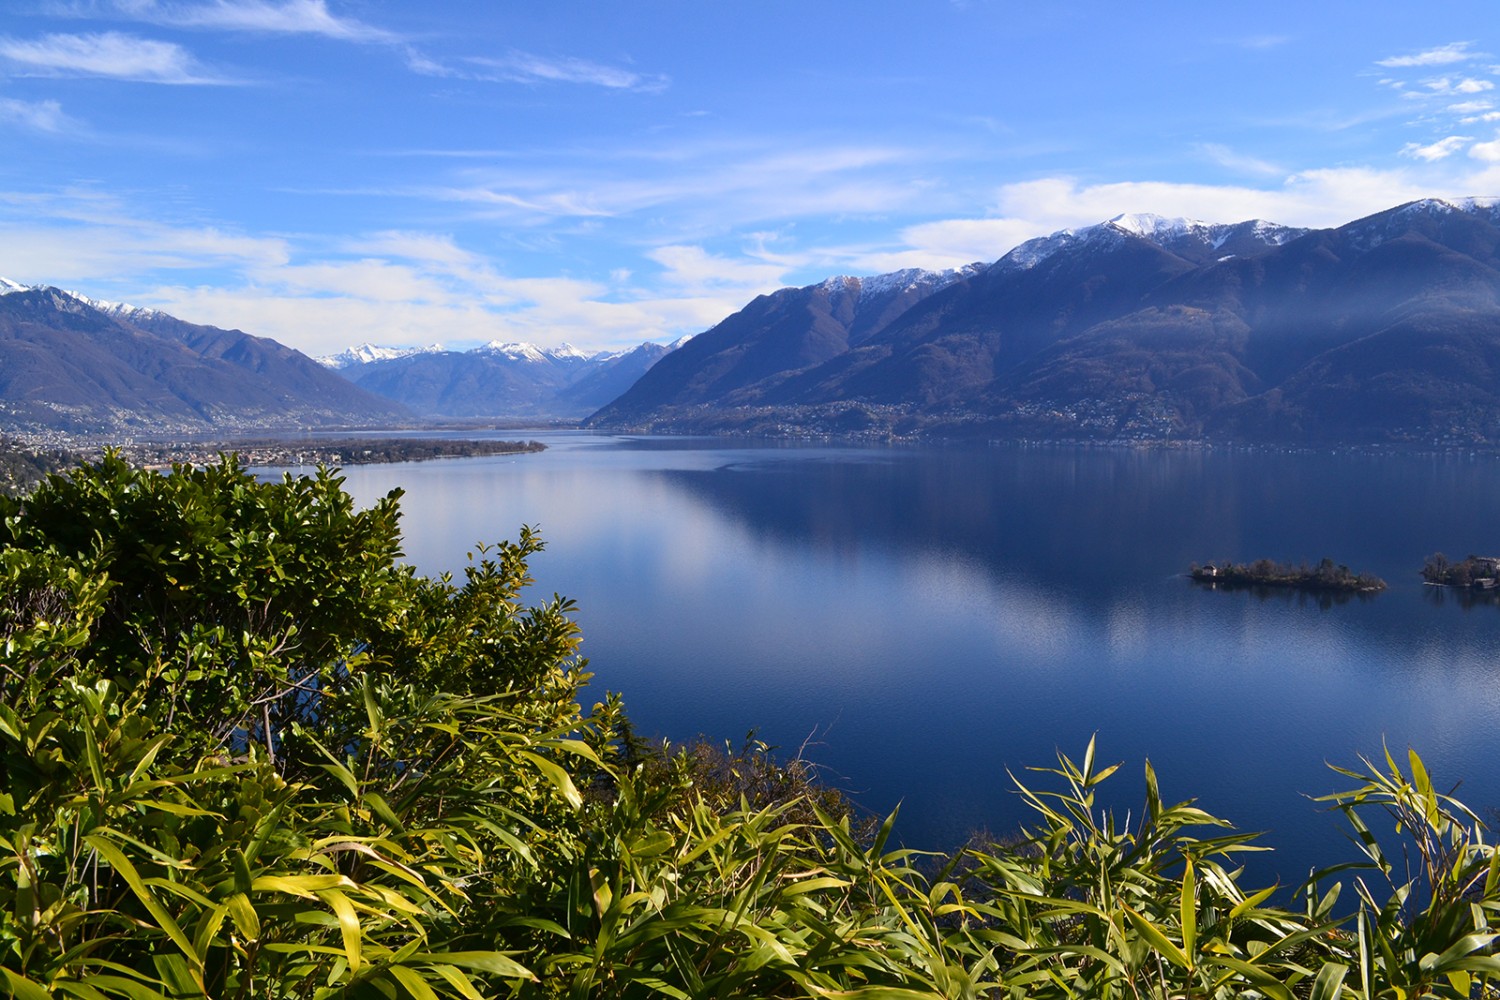 Vue de Ronco sopra Ascona sur le lac Majeur en direction d’Ascona.
Photos : Sabine Joss